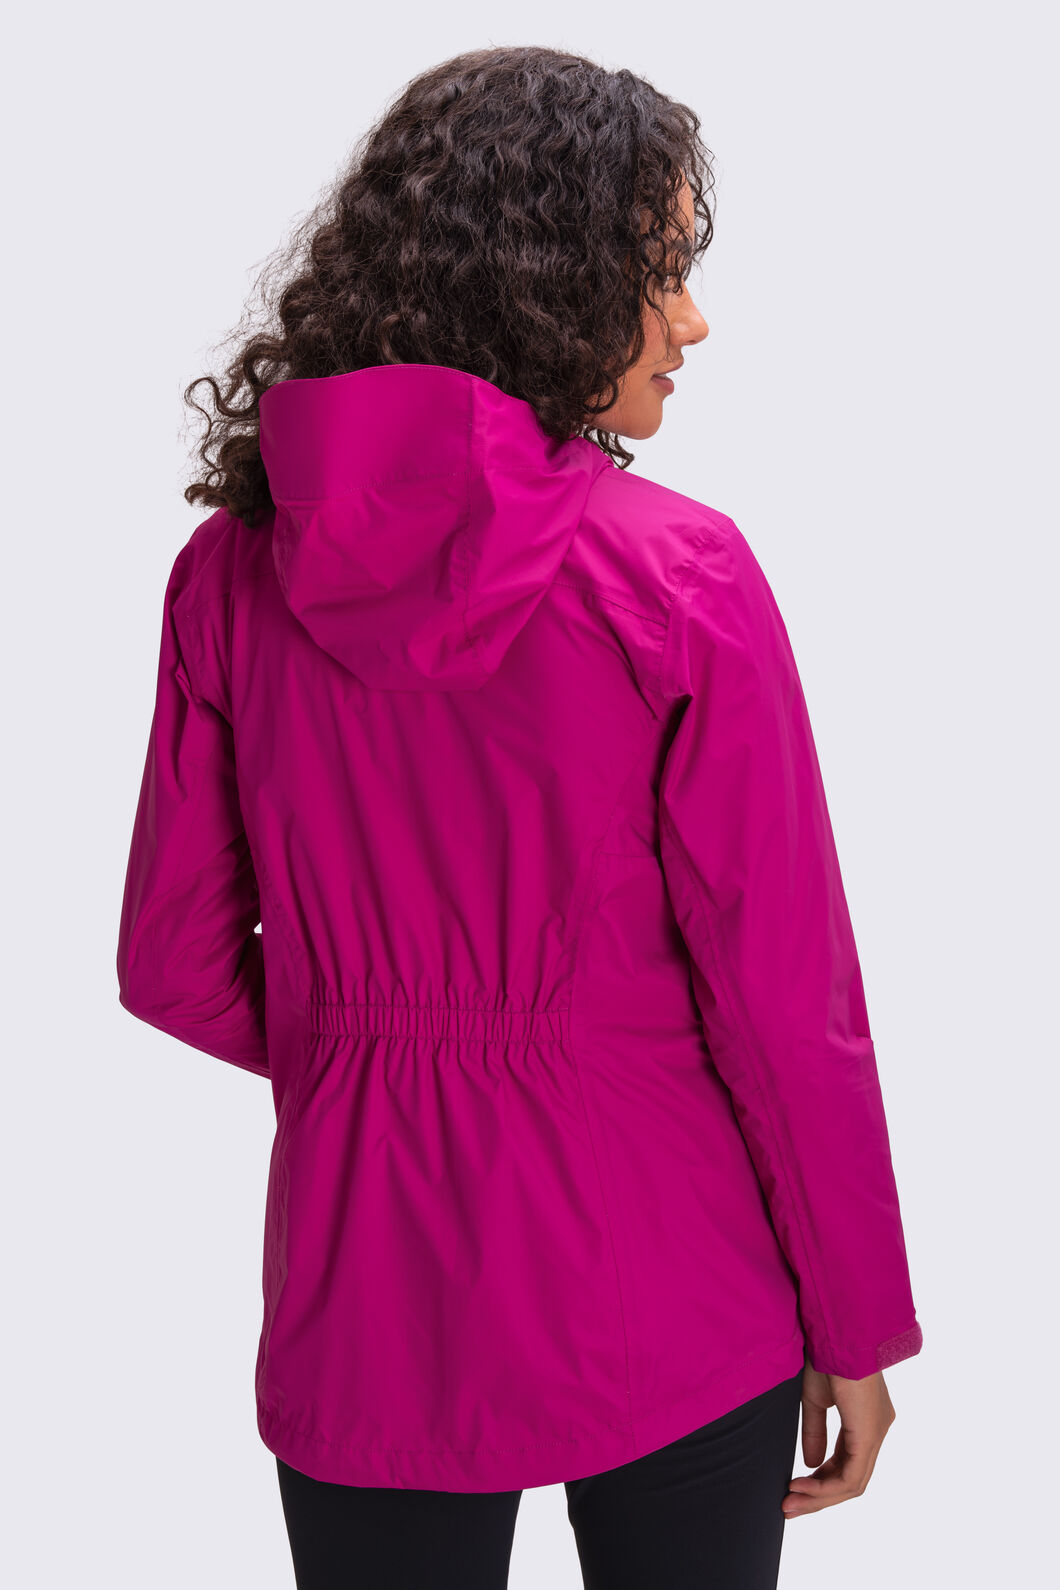 Macpac Women's Mistral Rain Jacket